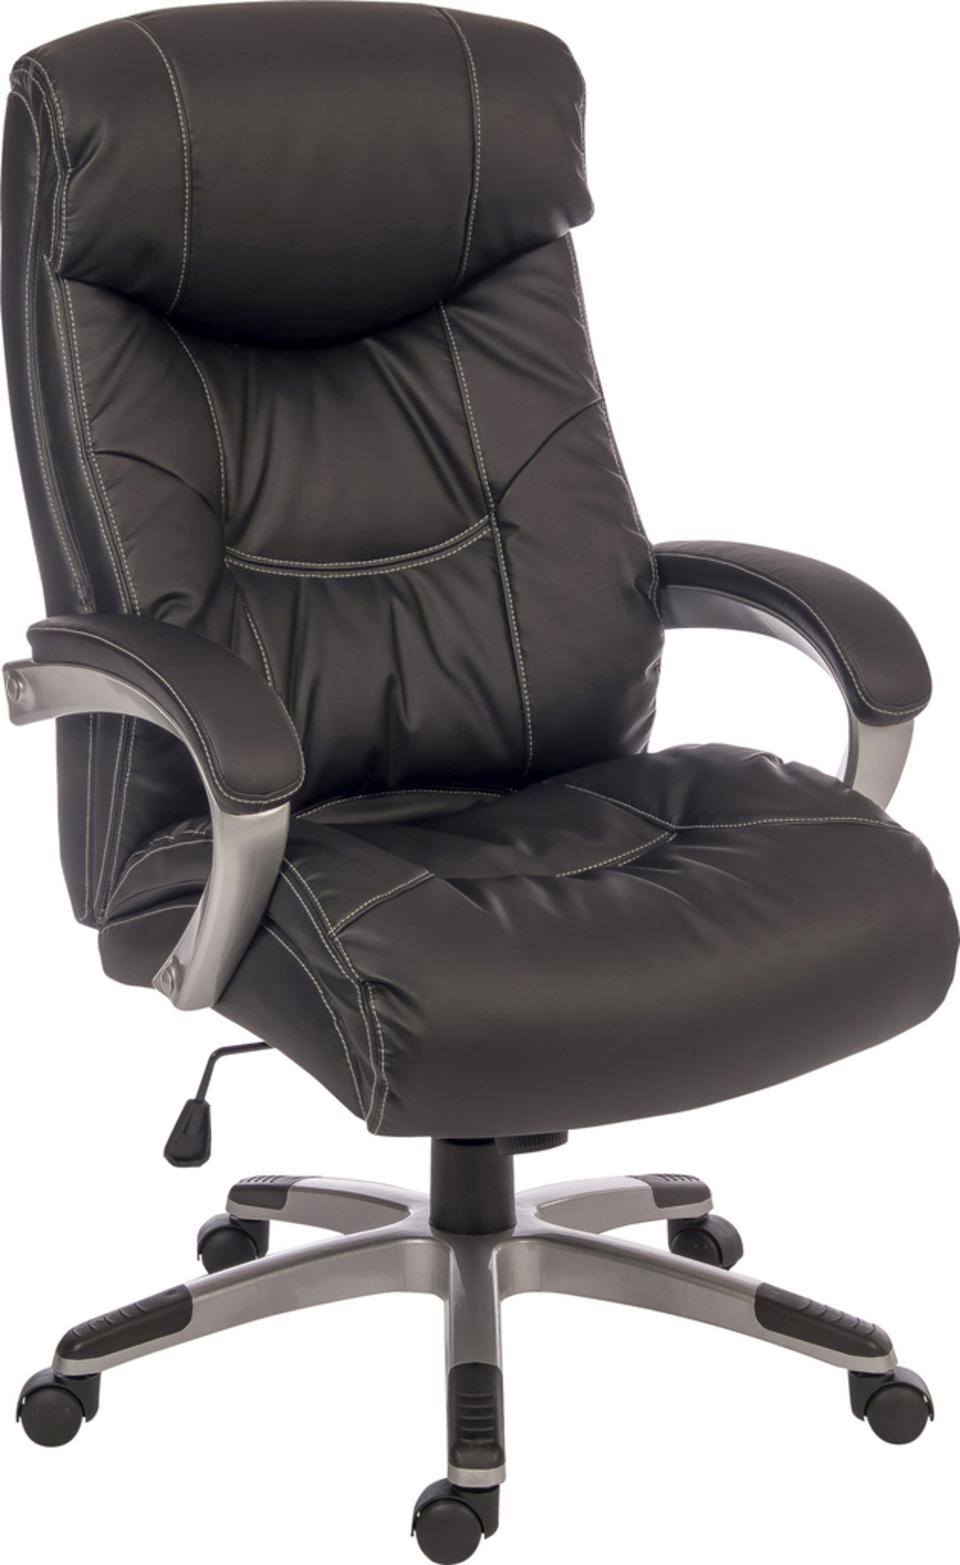 Siesta Leather Executive Chair